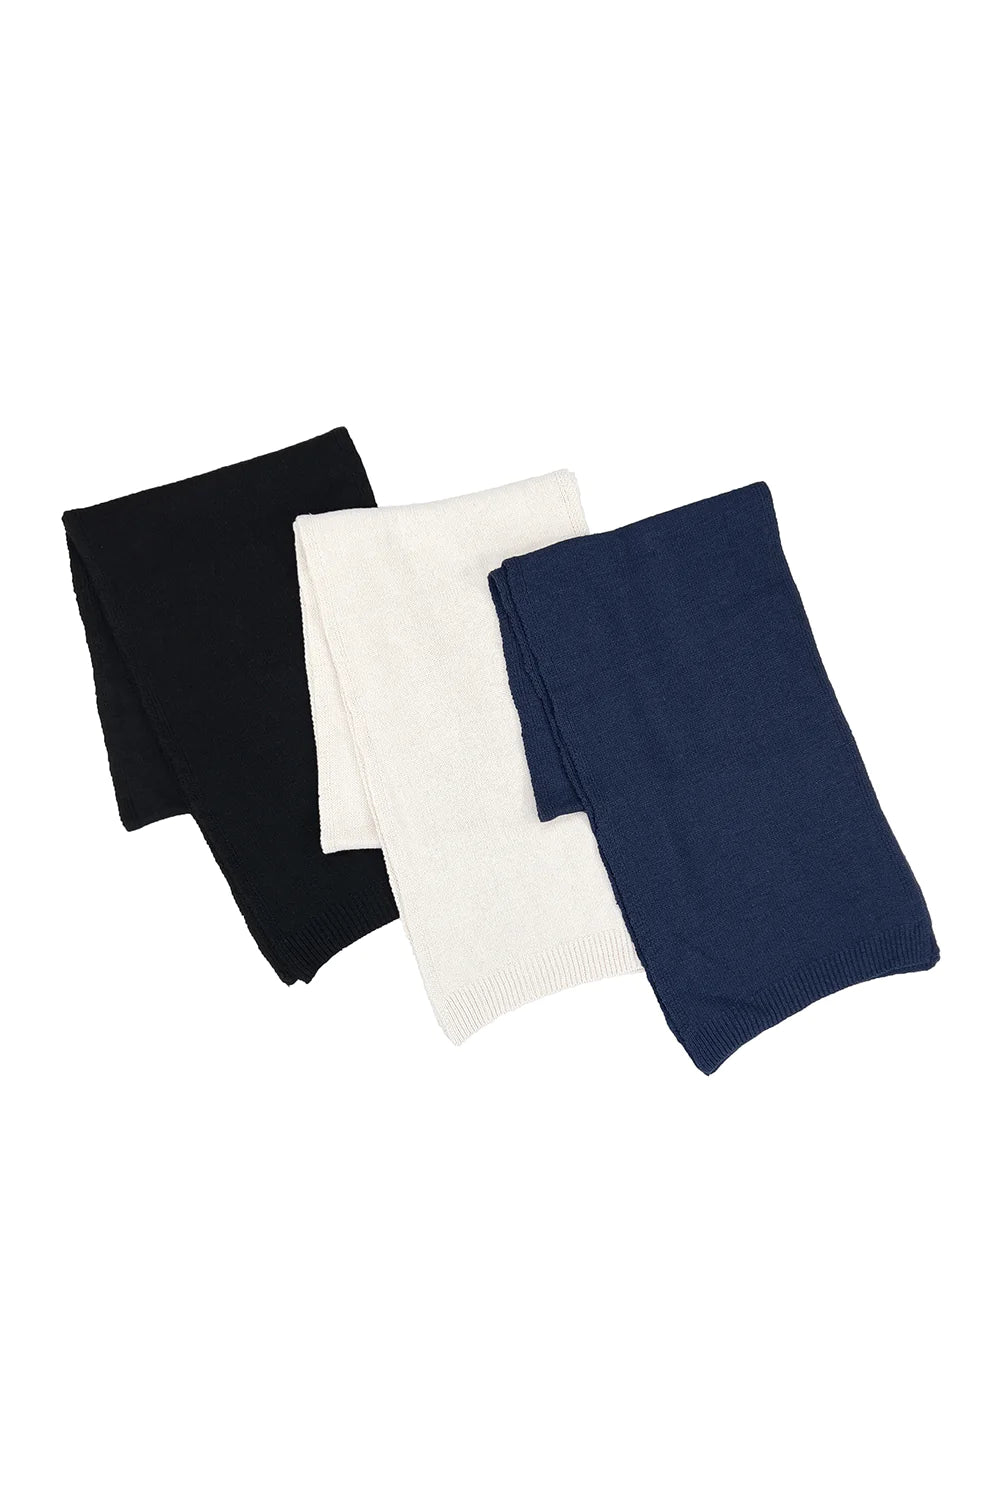 JUNGMAVEN Sustainable Hemp Accessories - Classic Knit Unisex Scarf - Hemp Merino Wool Eco-Blend - Black, Natural White, and Navy